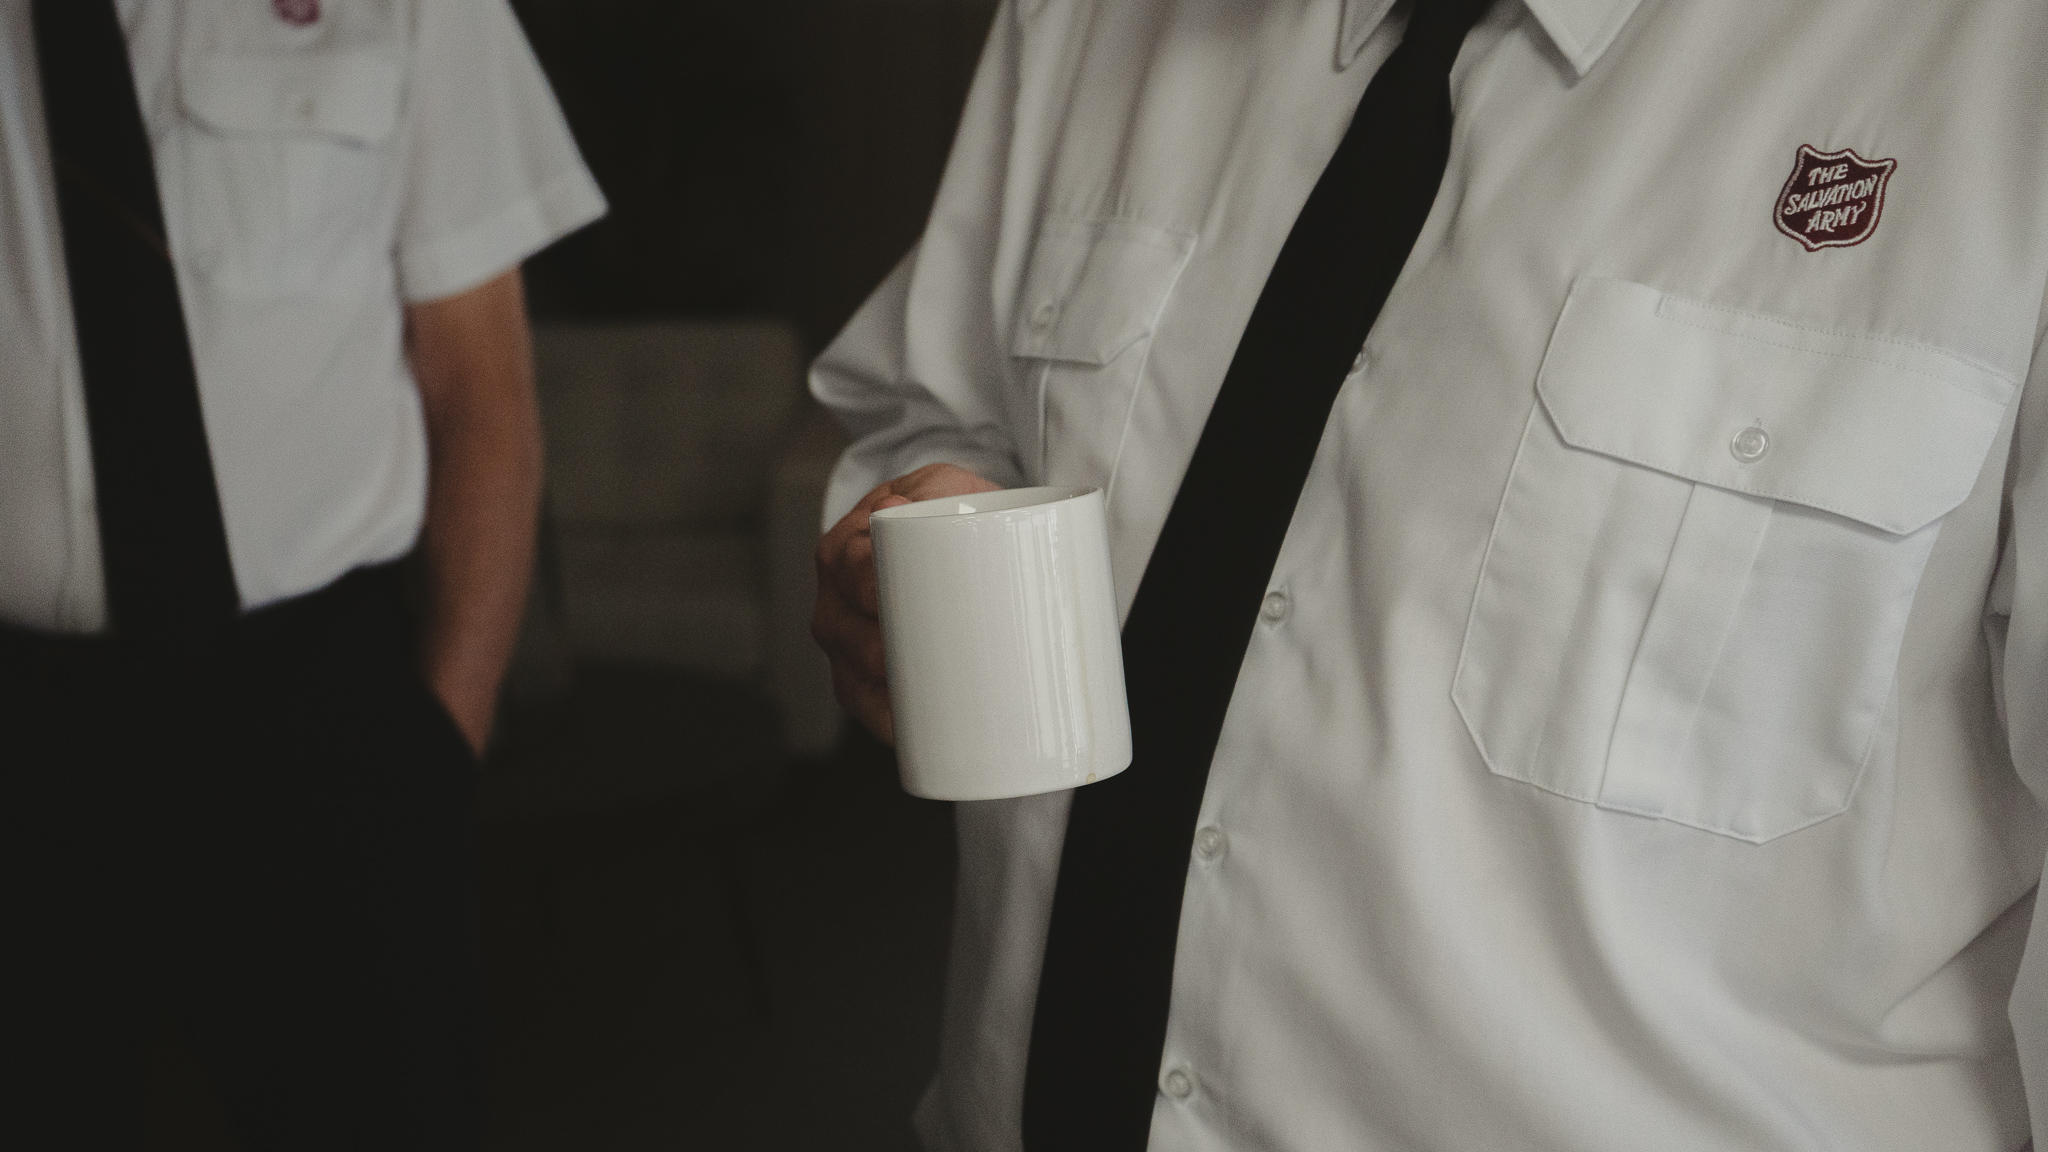 Salvation Army officer holding a mug